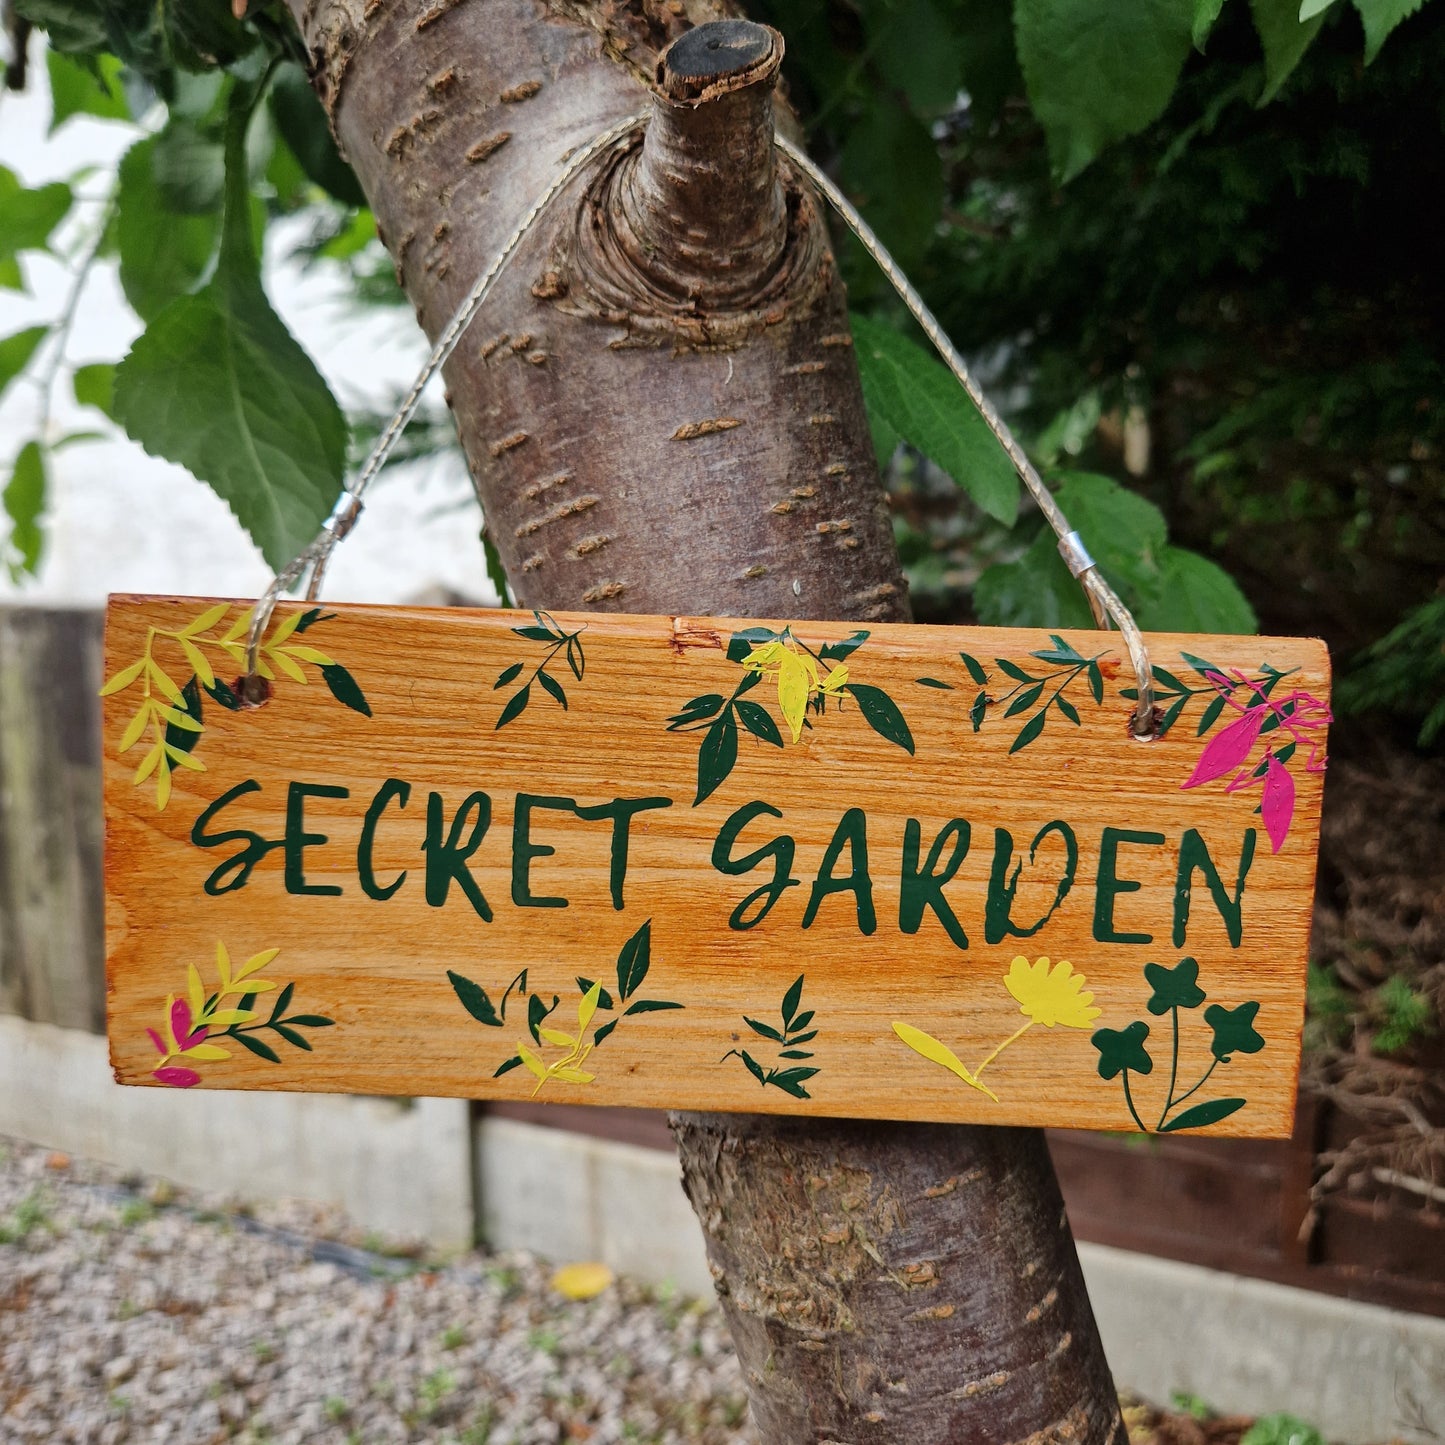 secret garden decorative sign outdoor decorative plaque for garden